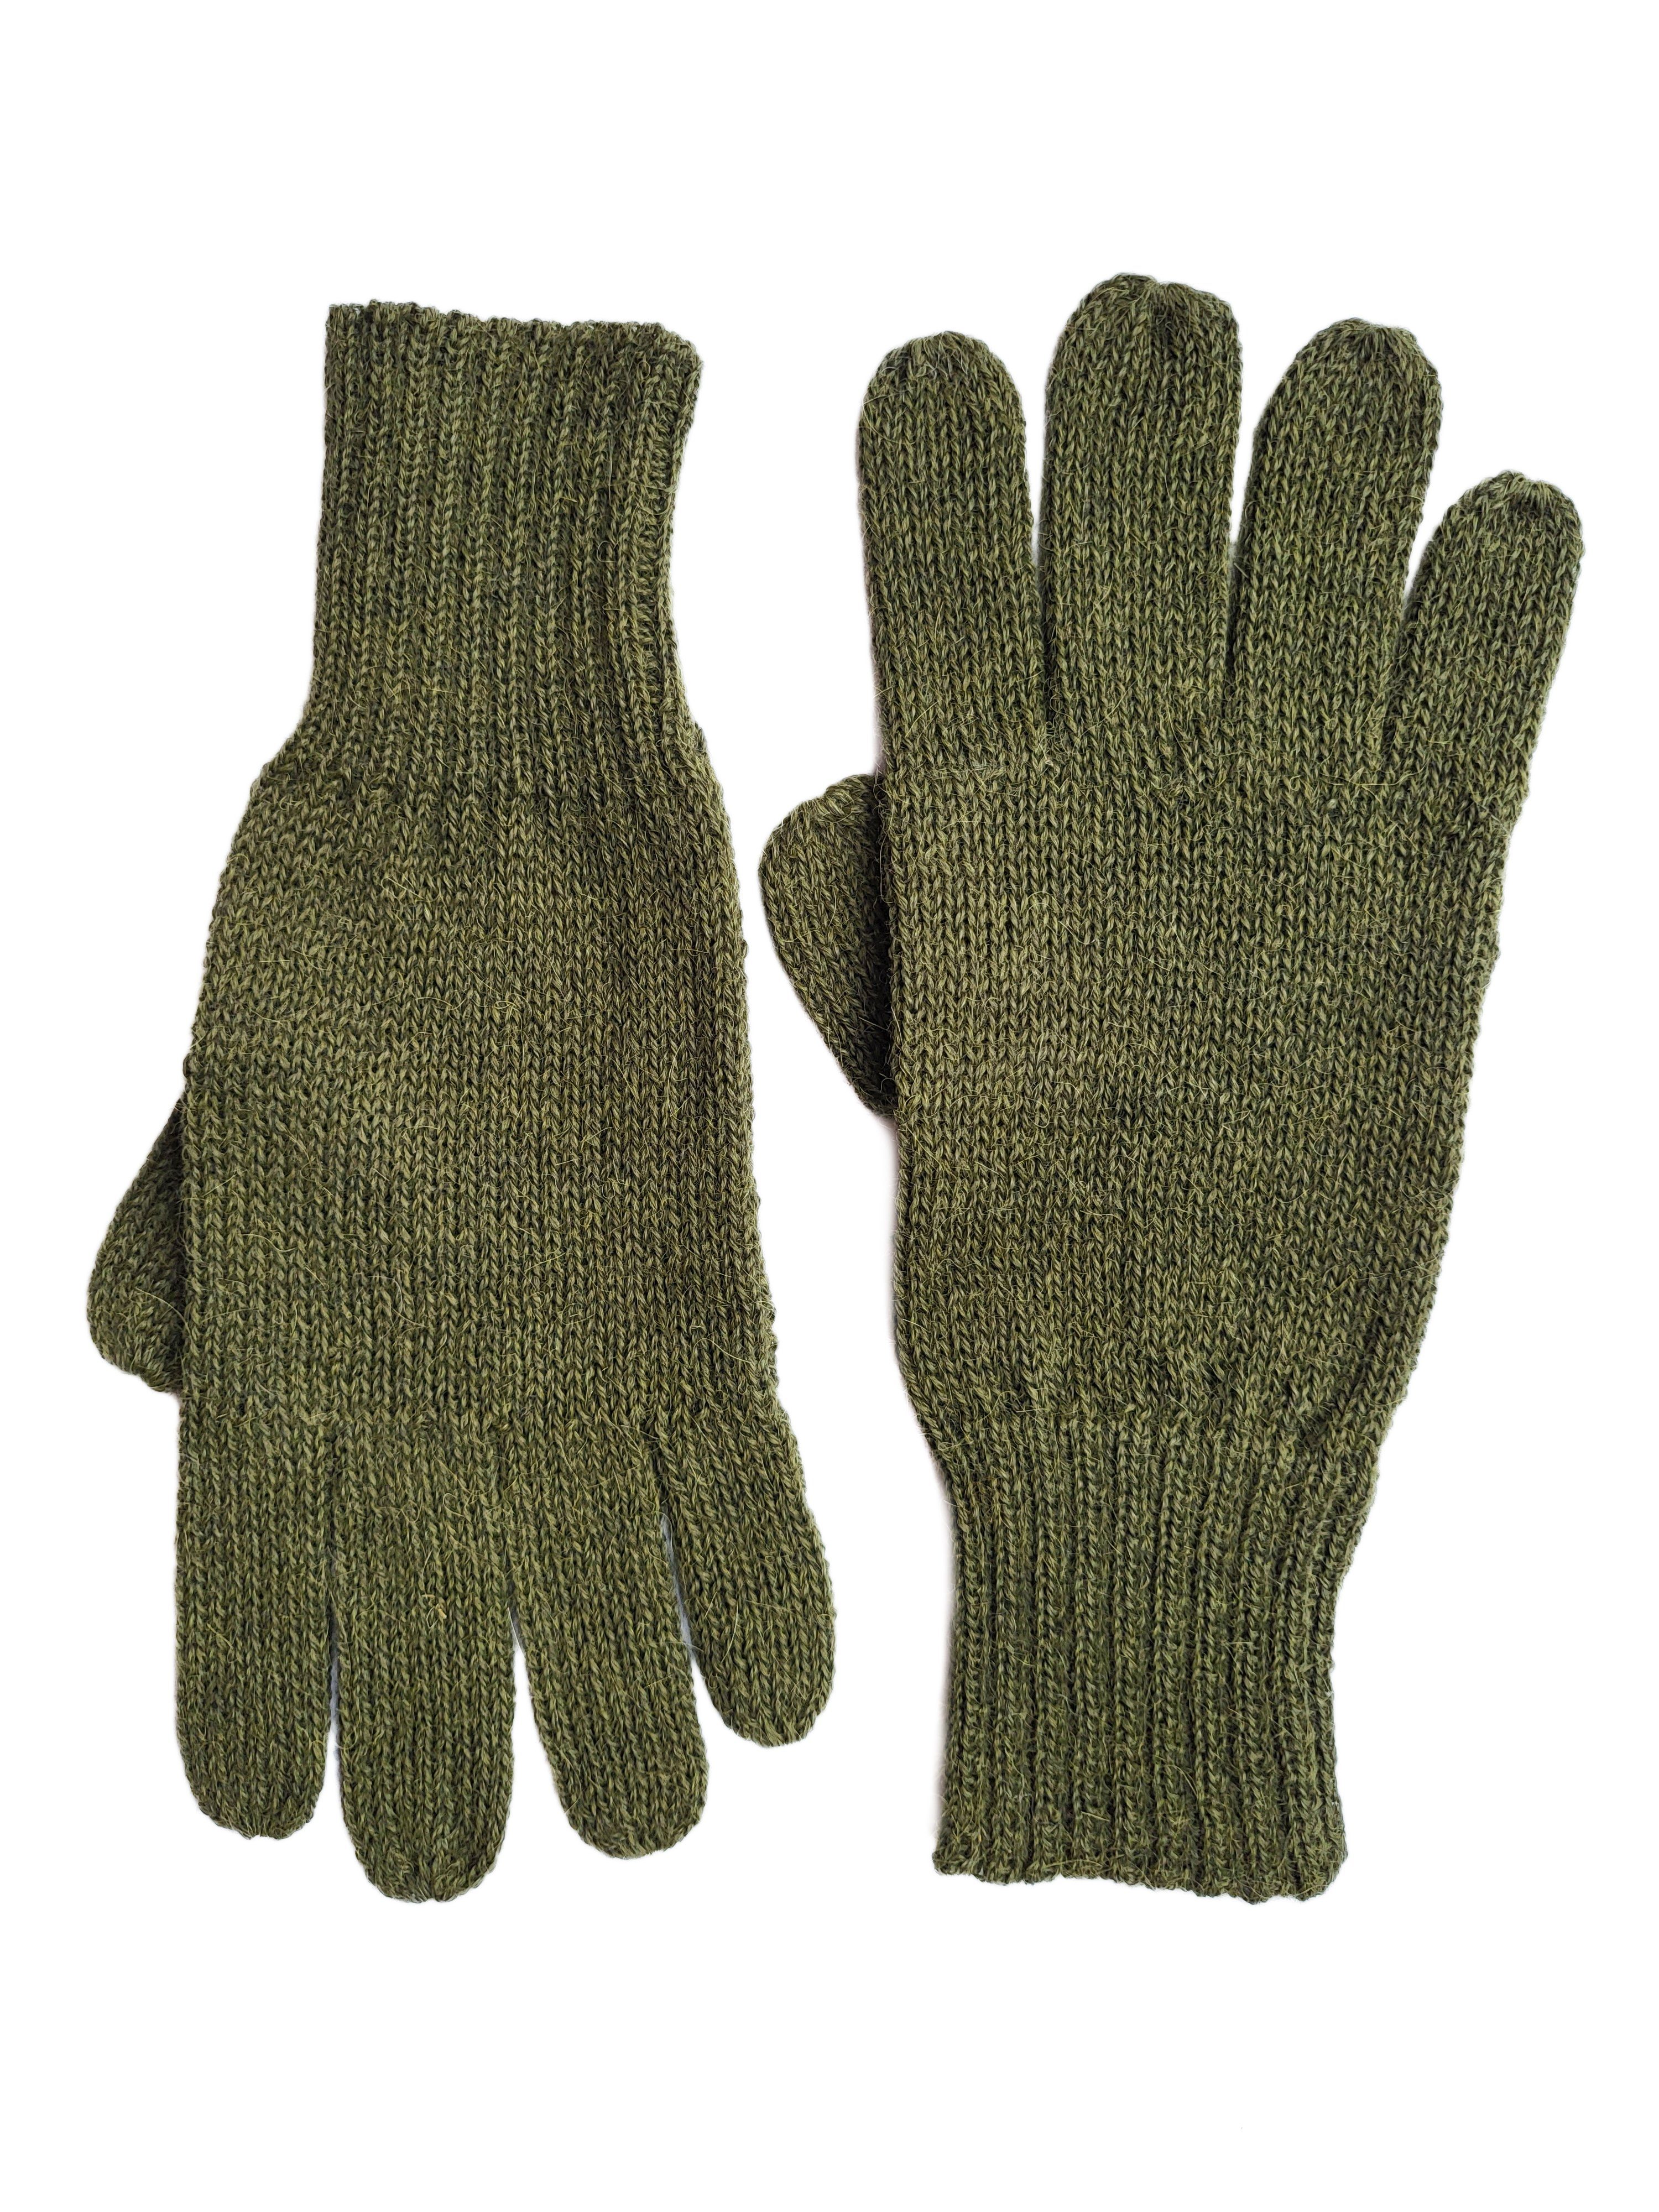 Posh Gear Strickhandschuhe Guantino Alpaka Fingerhandschuhe grün Alpakawolle oliv 100% aus